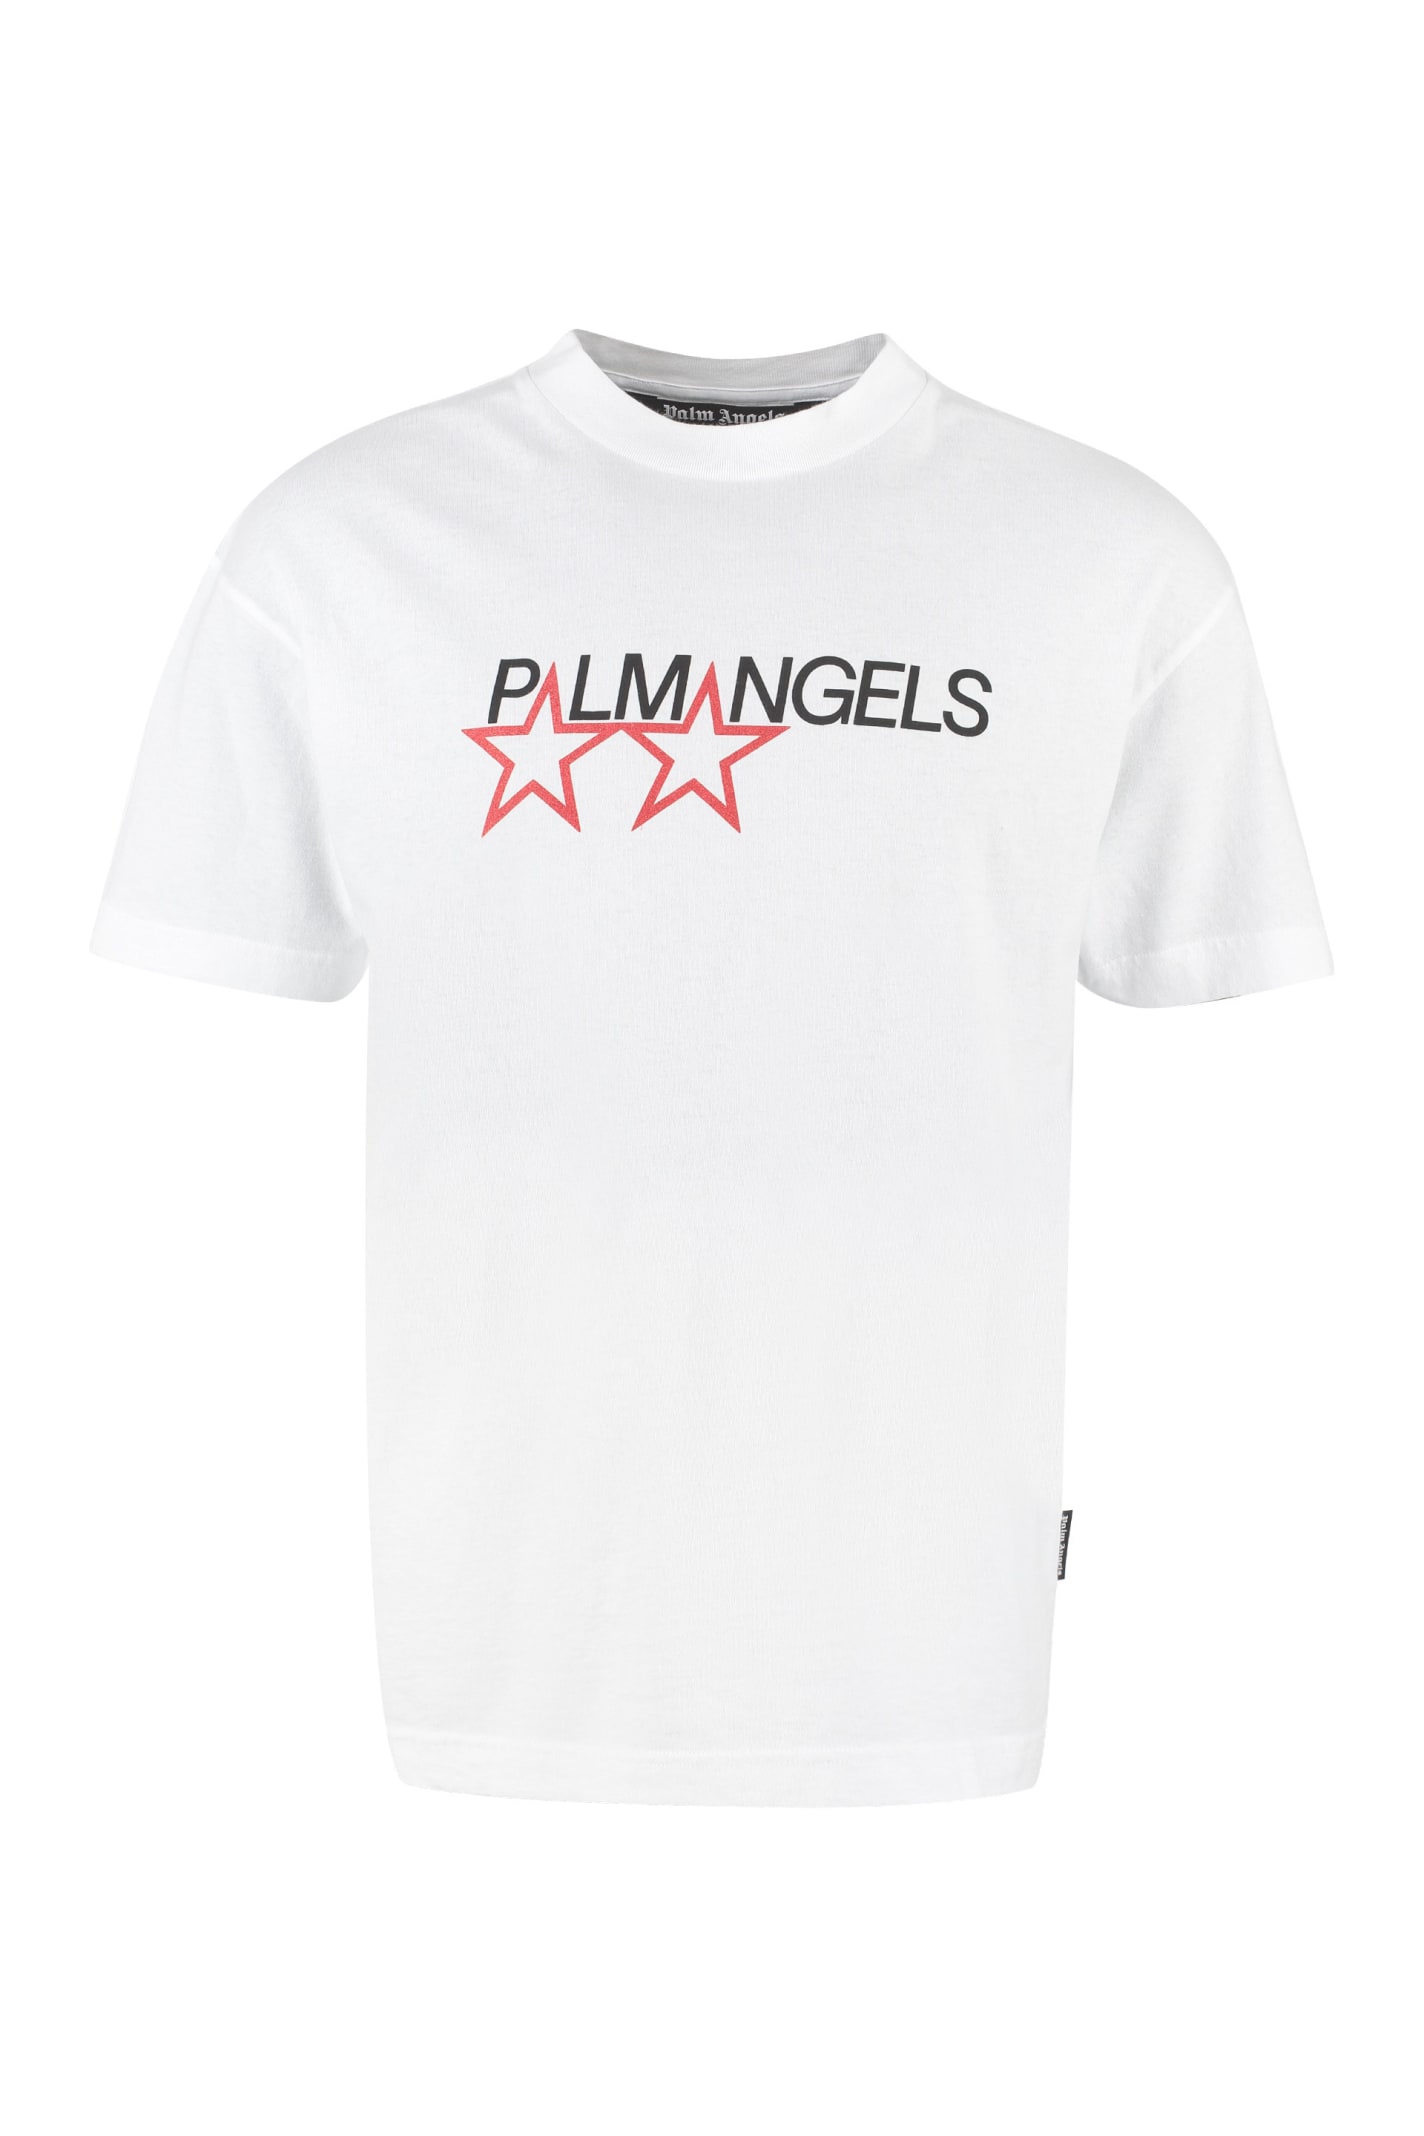 Palm Angels Logo Print T-shirt